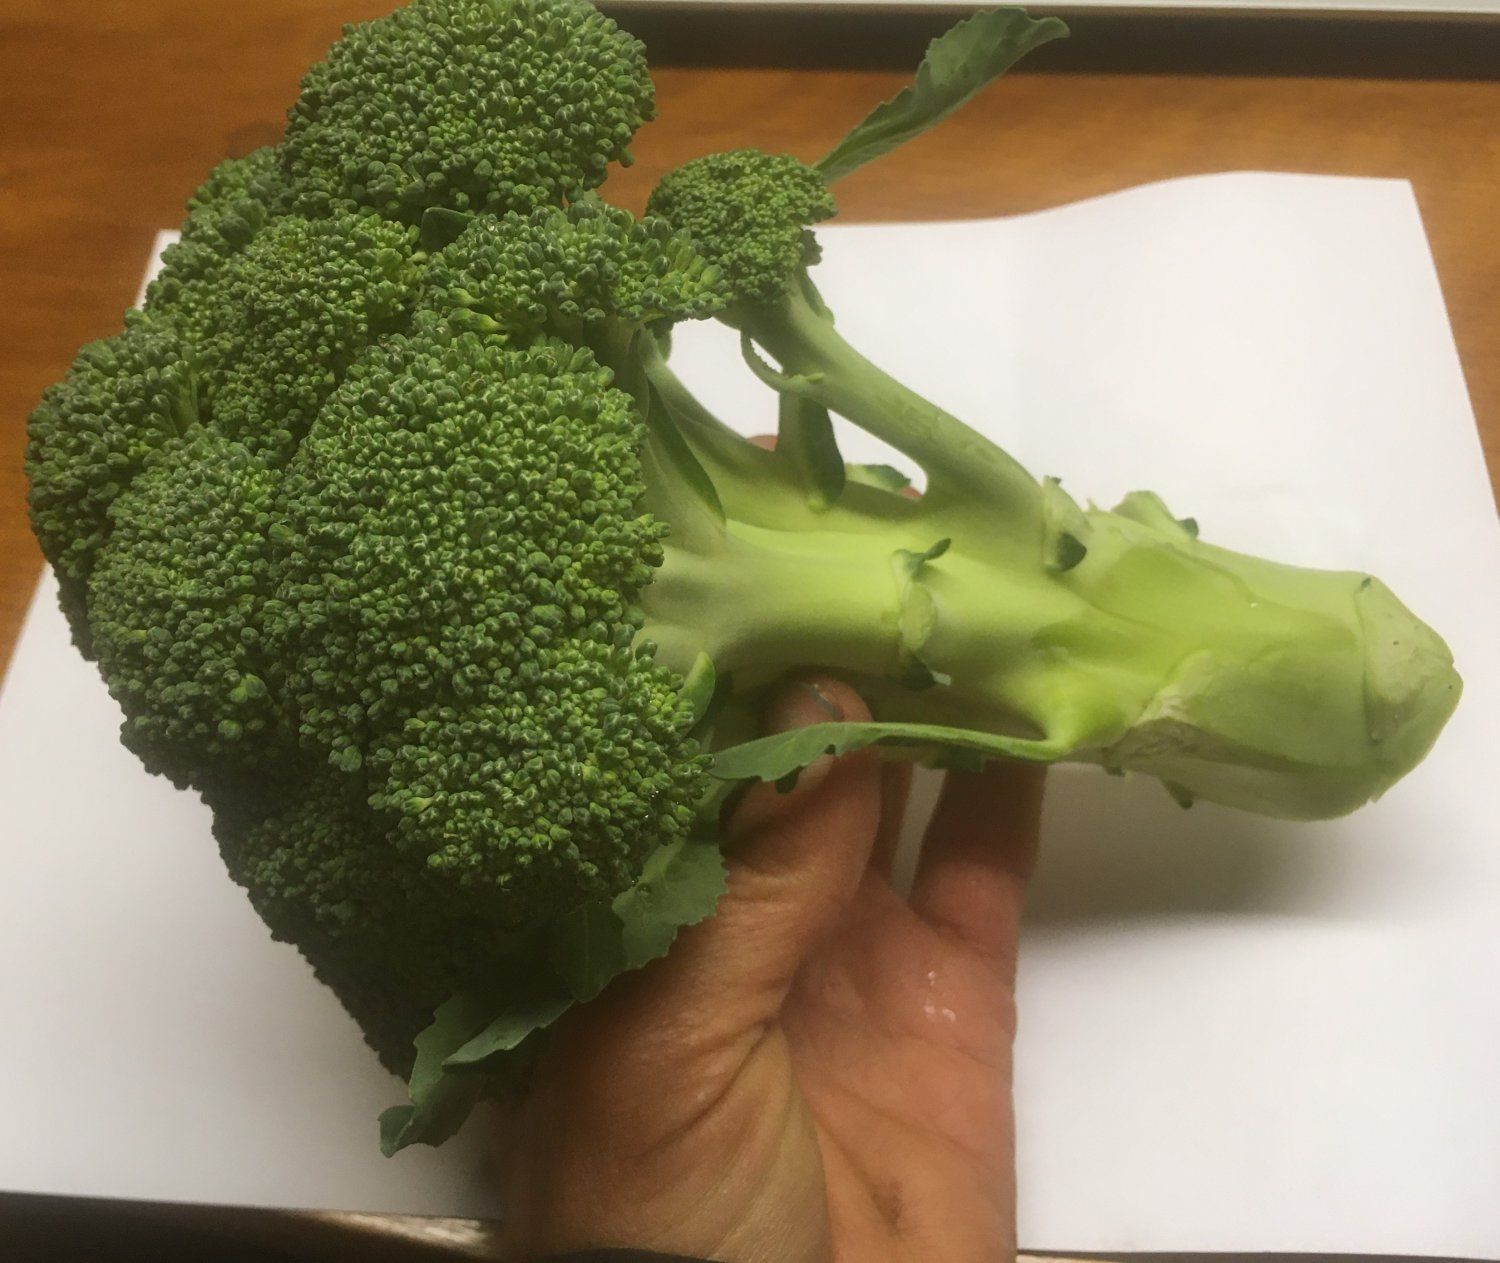 Farm Happenings for November 20, 2021: Broccoli and Garlic